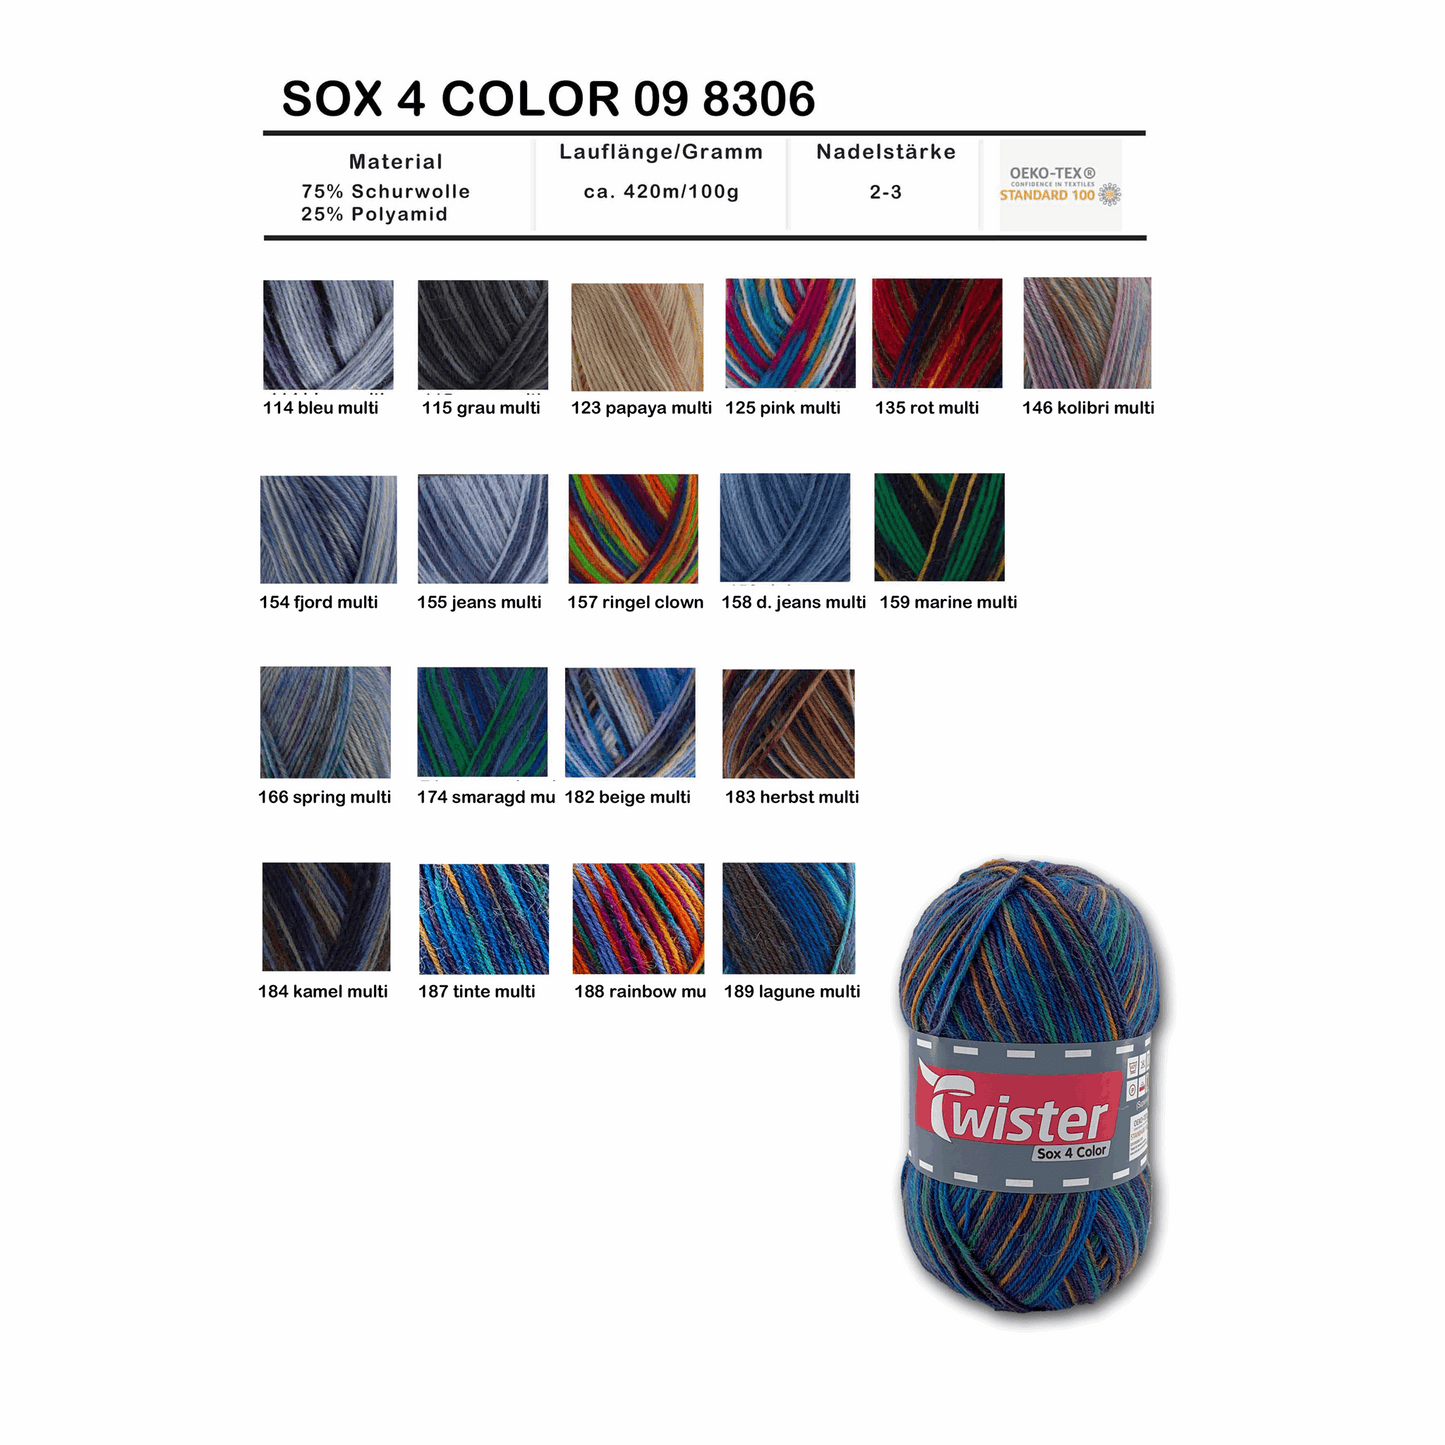 Twister Sox4 Color superwash, marine petrol, 98306, Farbe 833